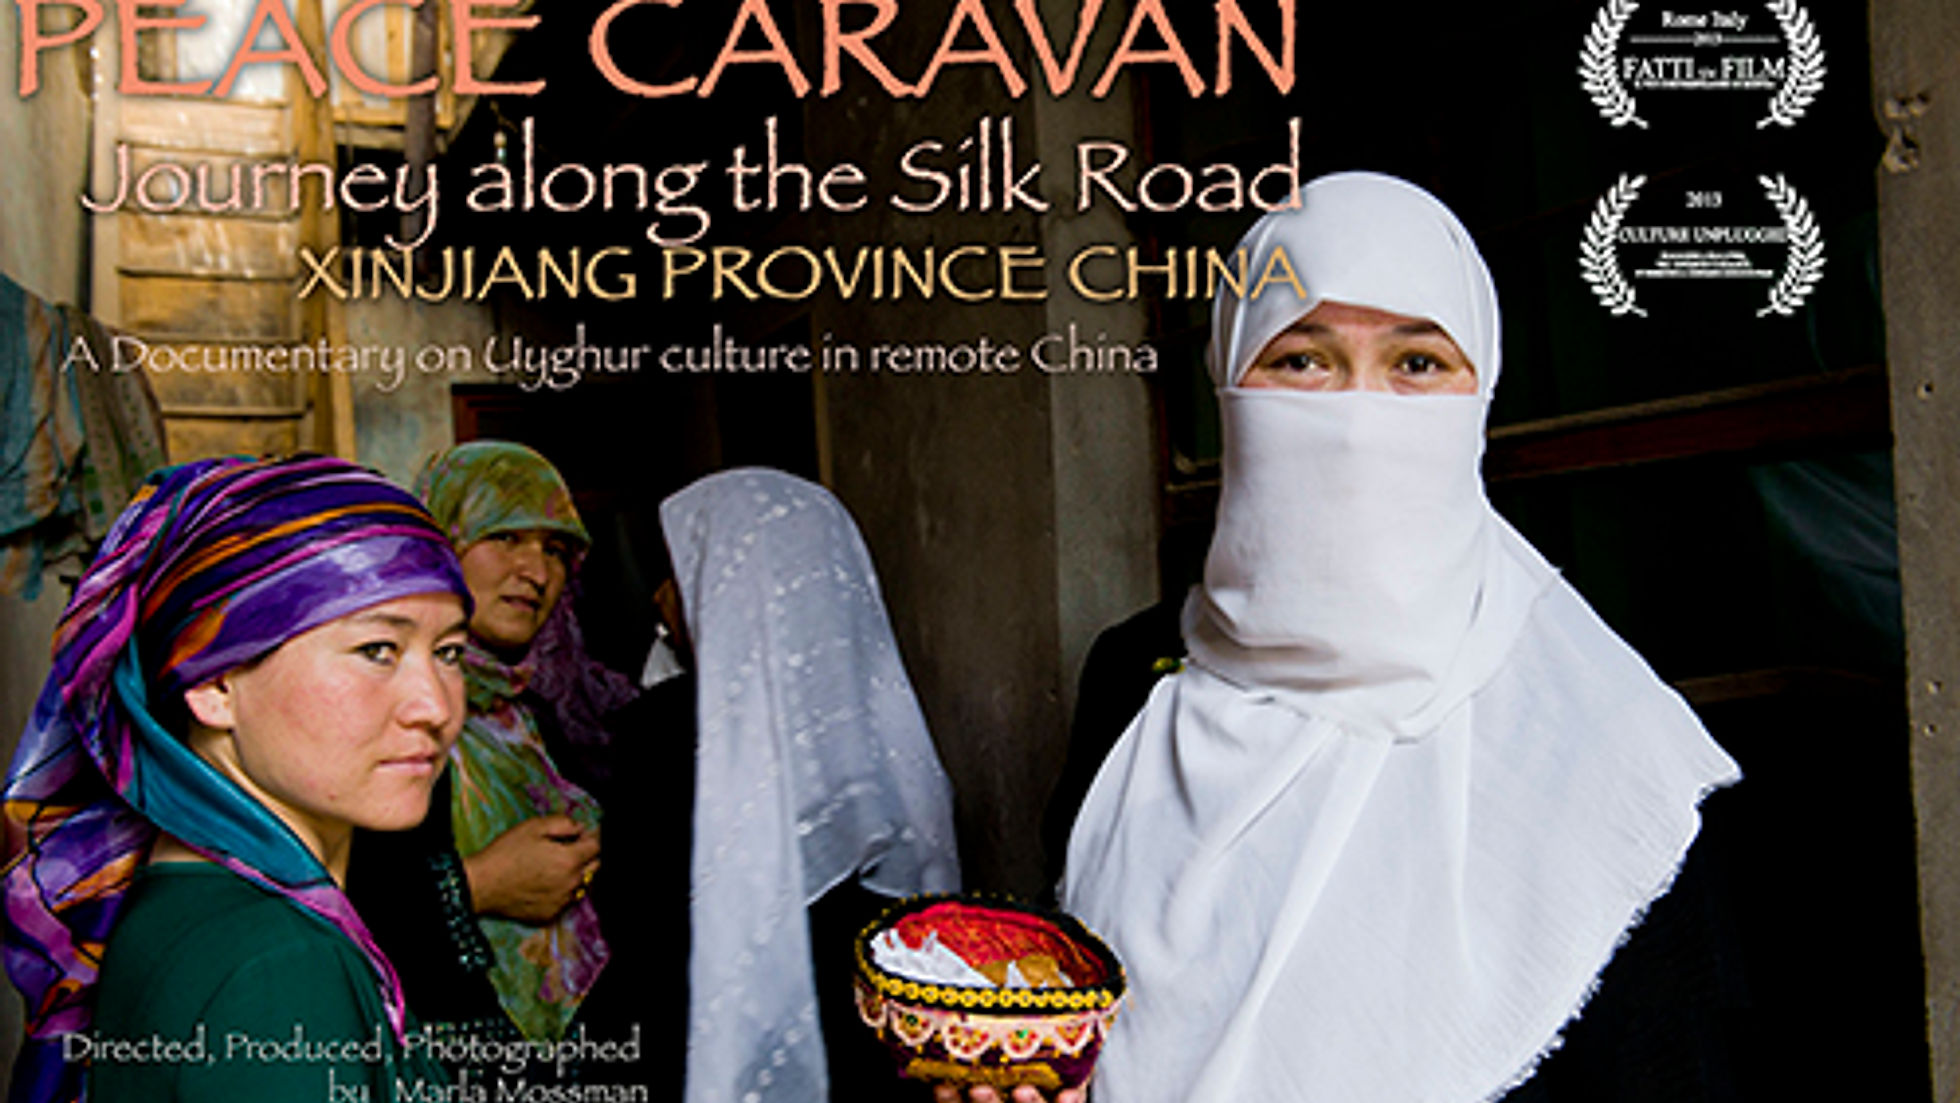 Trailer: Peace Caravan Journey Along the Silk Road: Xinjiang Province, China